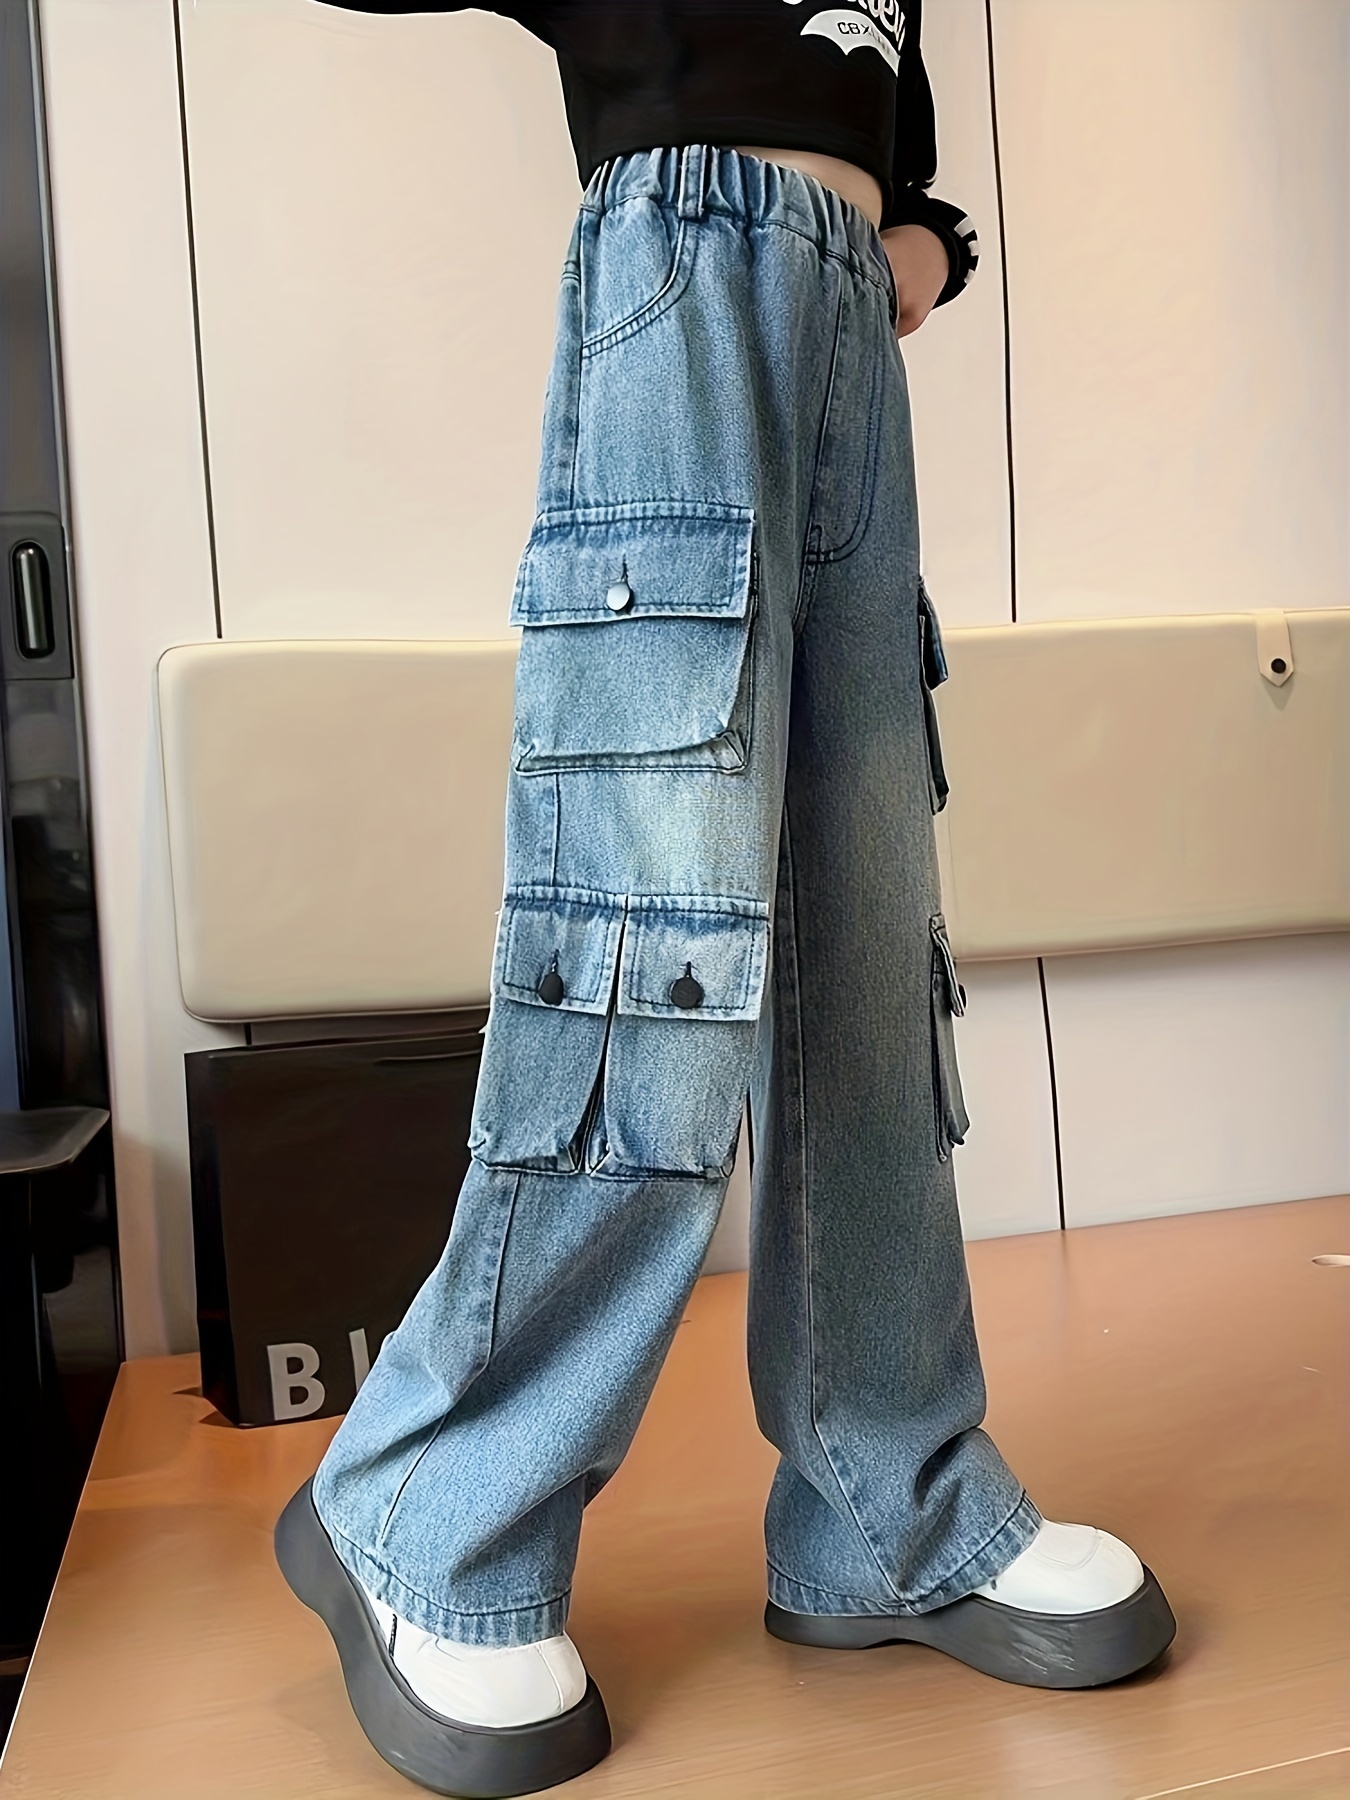 Teenage Girls Fashion Straight Cargo Pants with Four Pockets